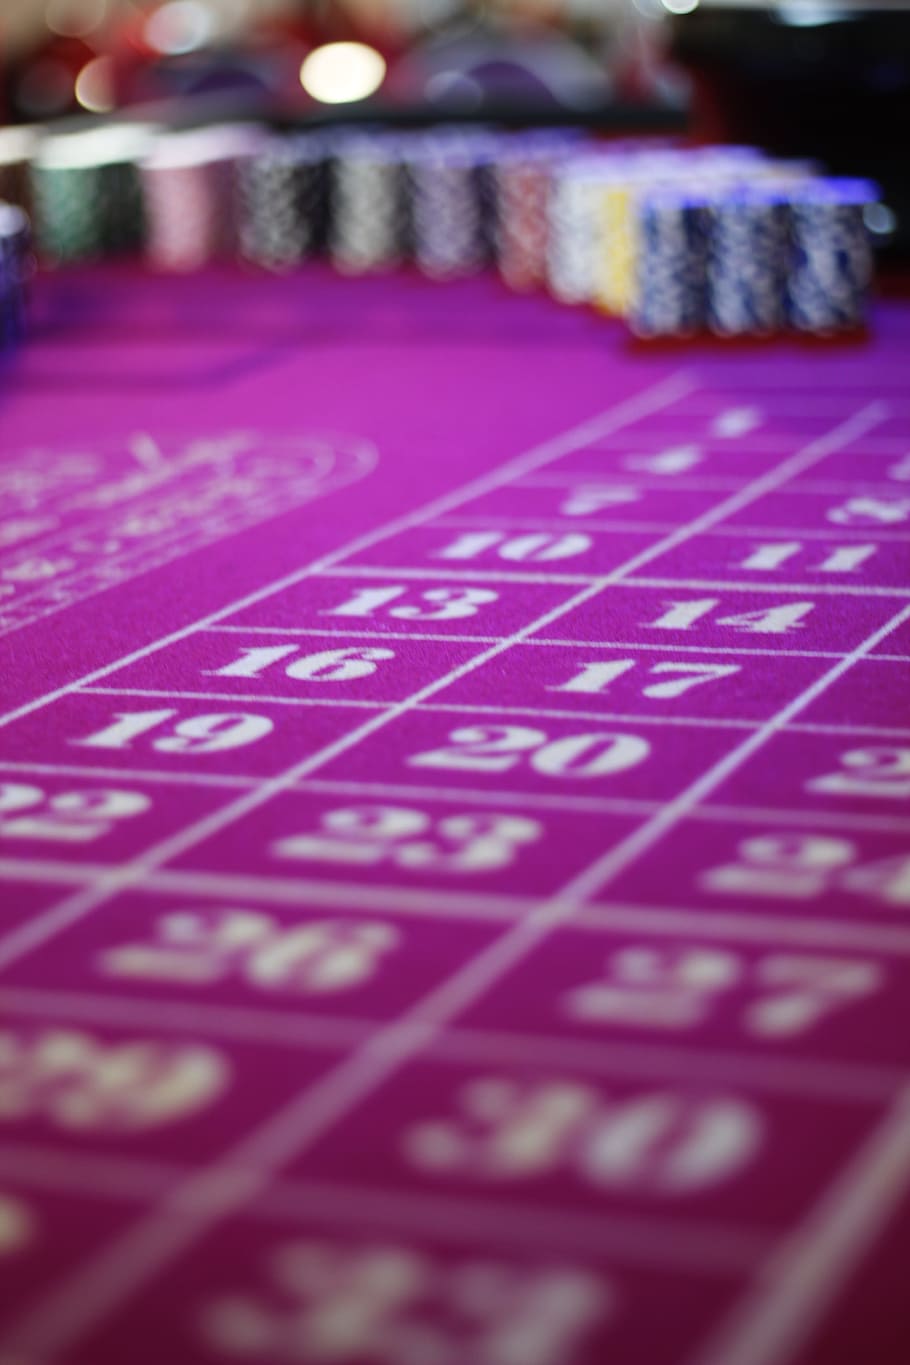 meja poker, Kasino, Bermain, Las Vegas, Judi, Keripik, keberuntungan, kartu as, untung, peta